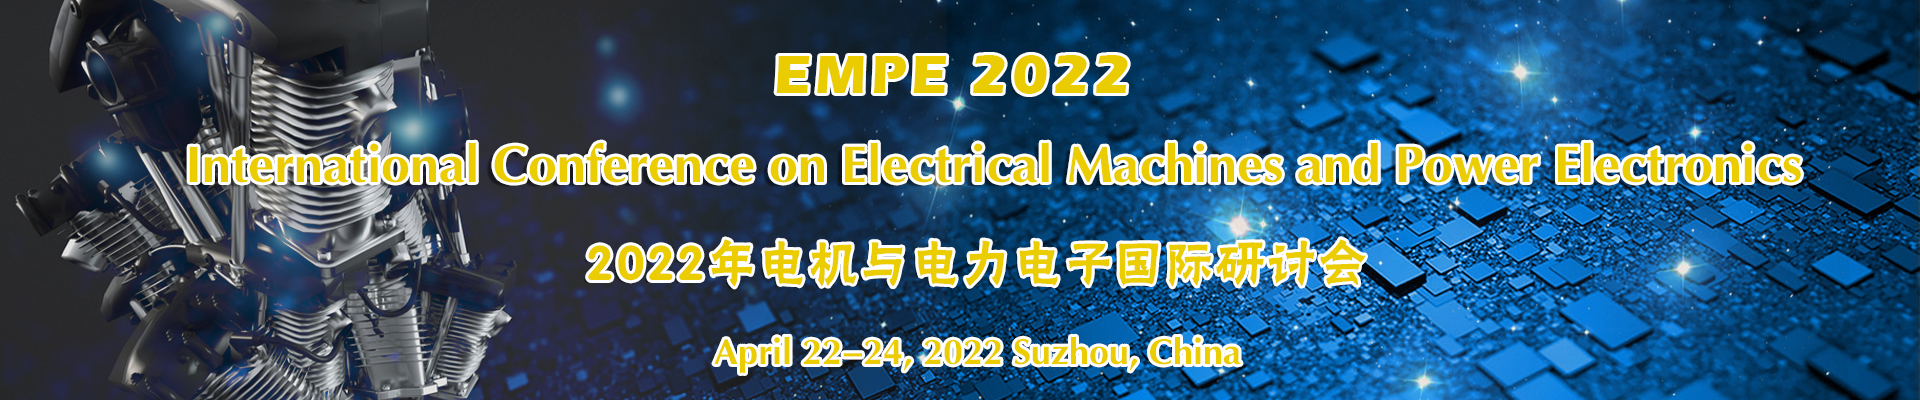 Int'l Conference on Electrical Machines and Power Electronics (EMPE 2022), Suzhou, Jiangsu, China